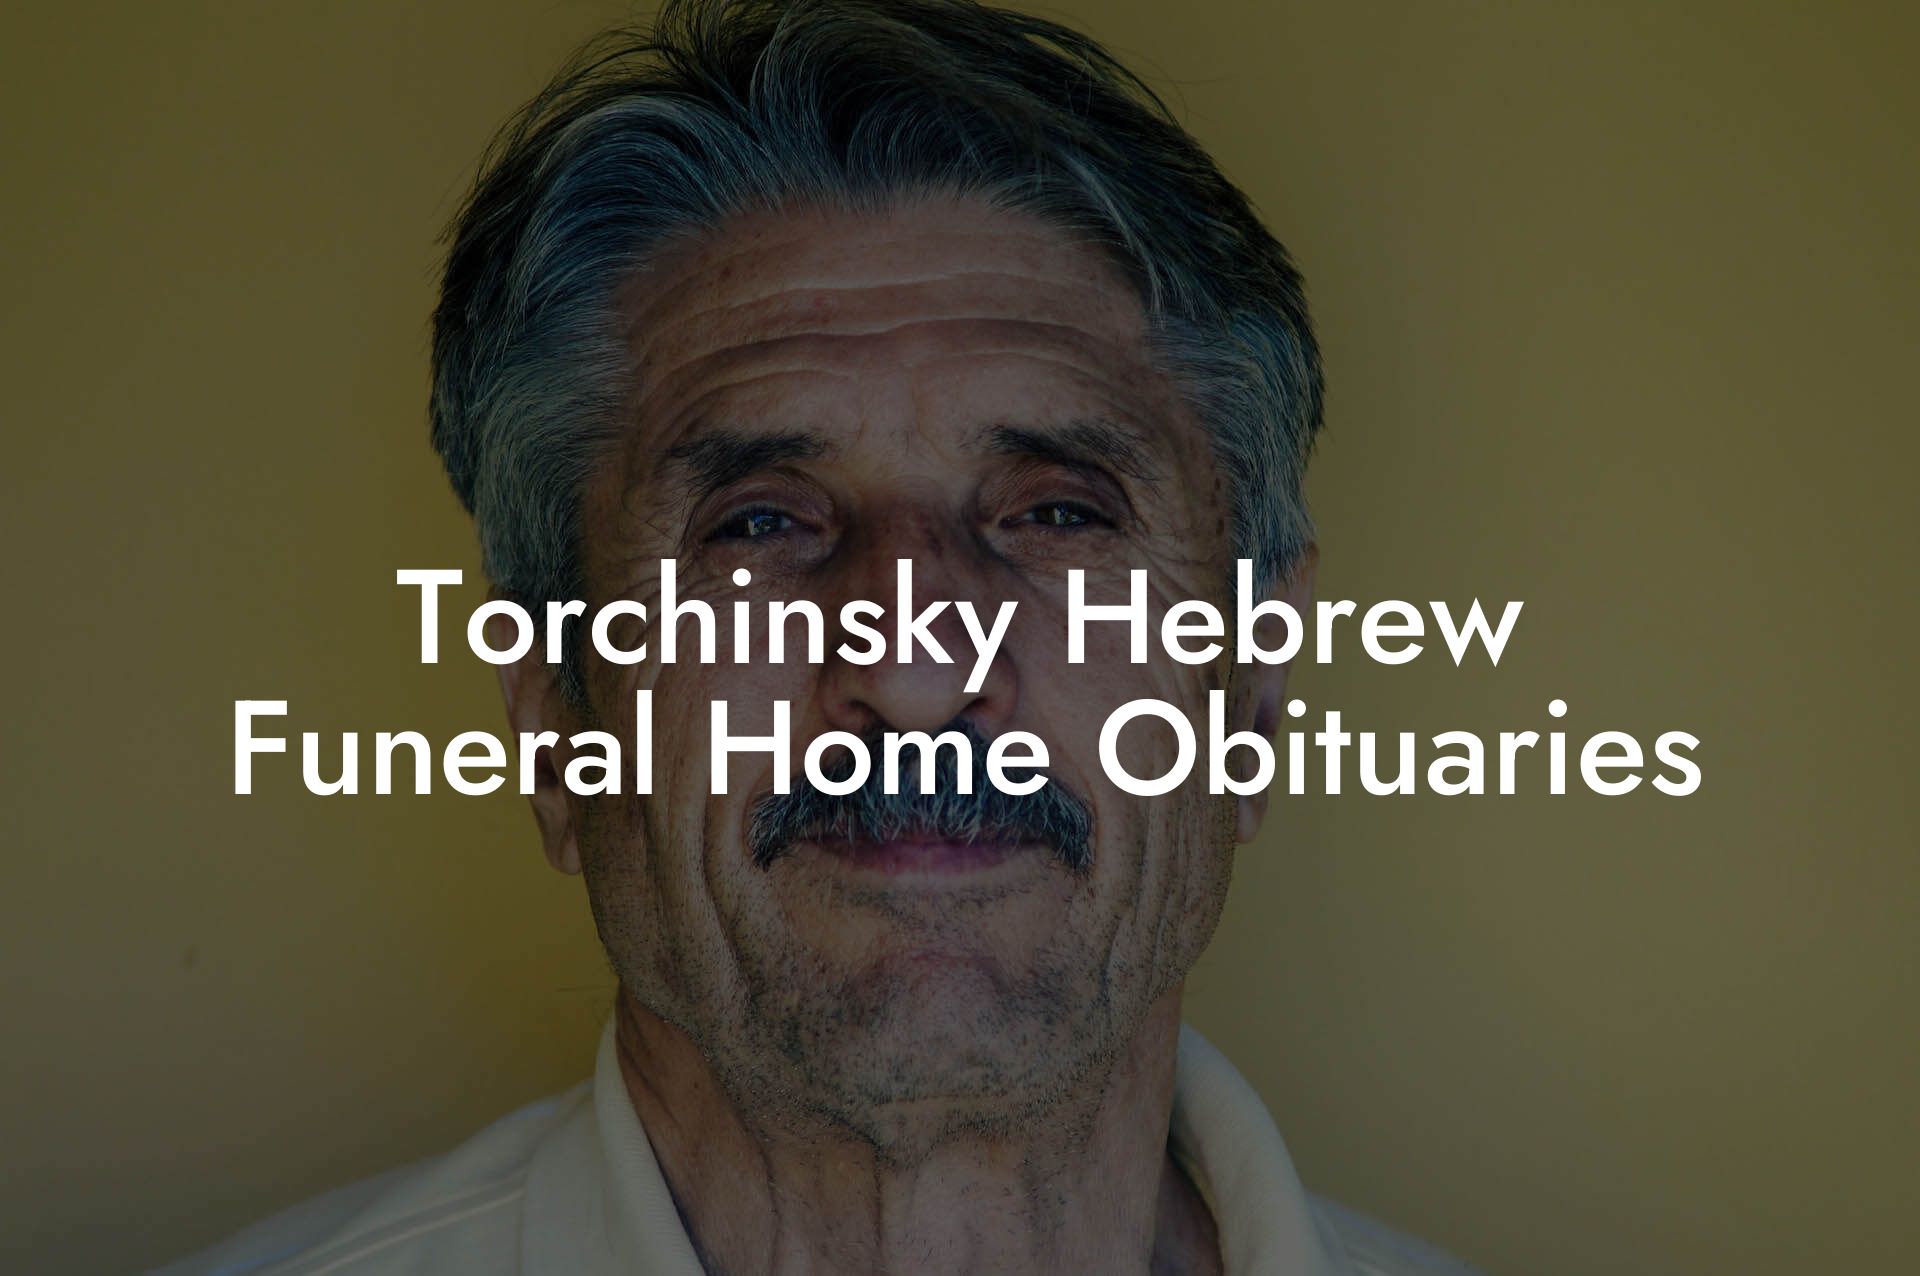 Torchinsky Hebrew Funeral Home Obituaries